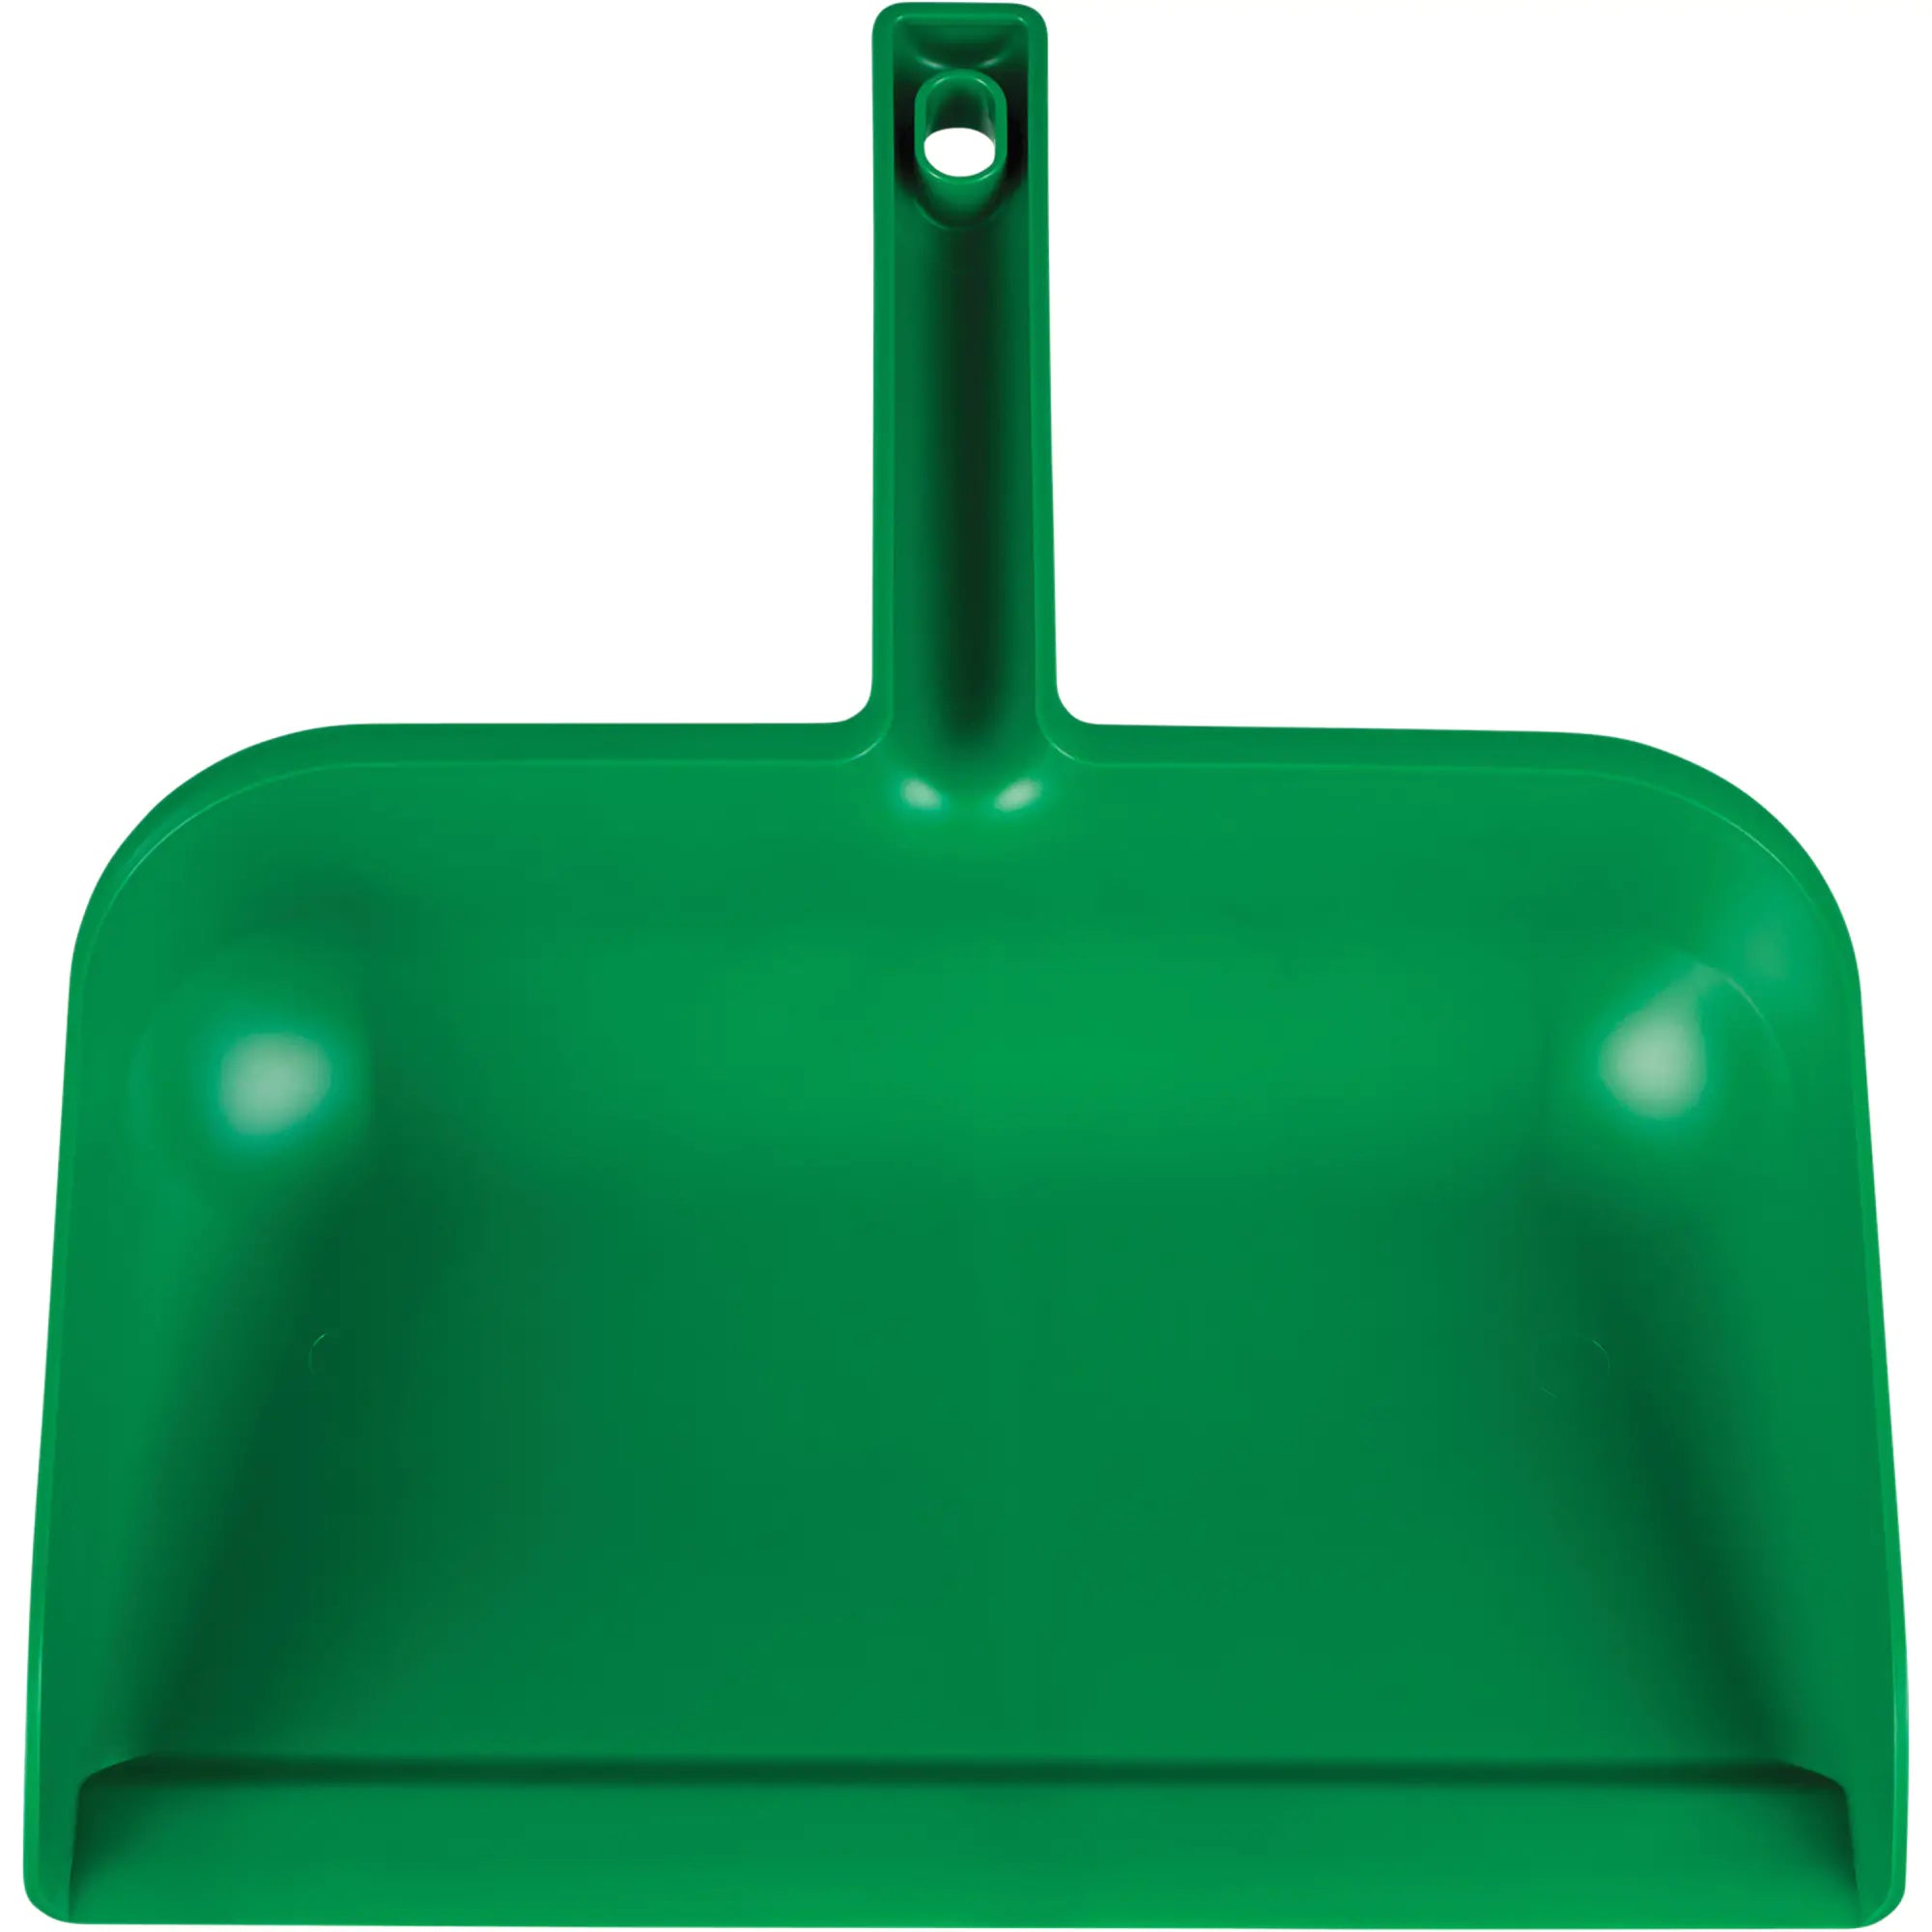 ColorCore Handheld Dustpan - Green